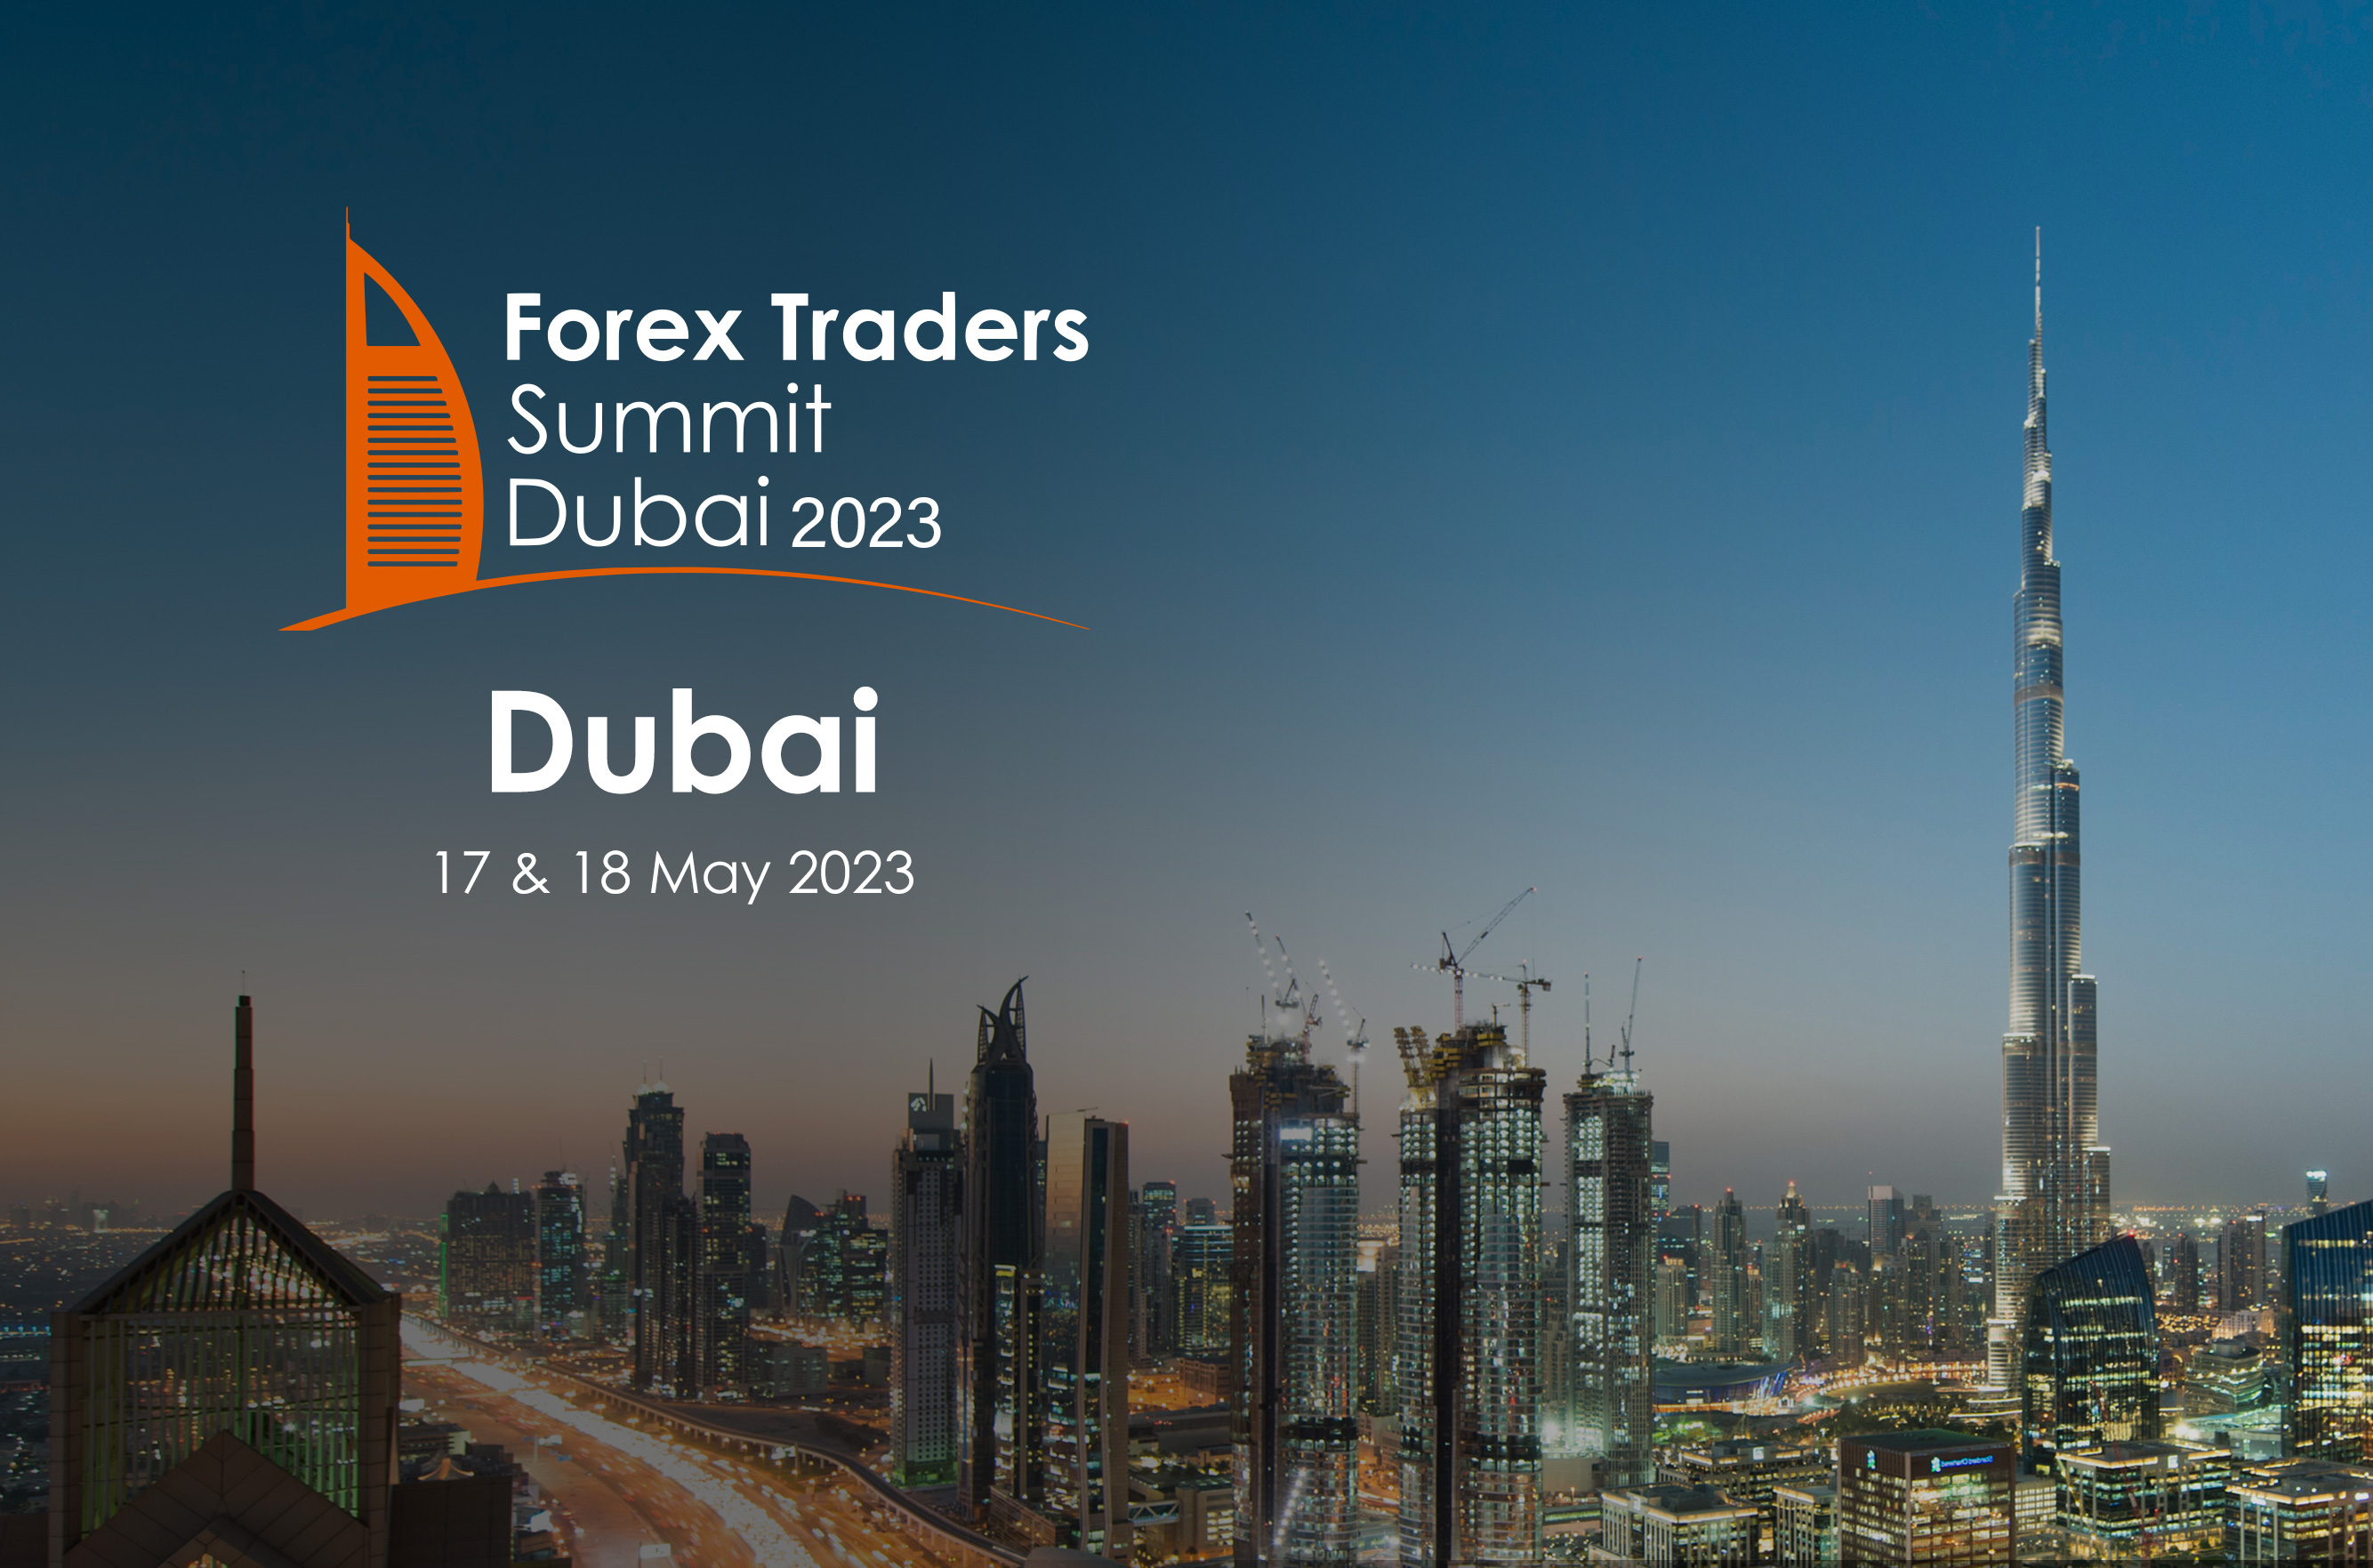 Forex Traders Summit 2023 in Dubai